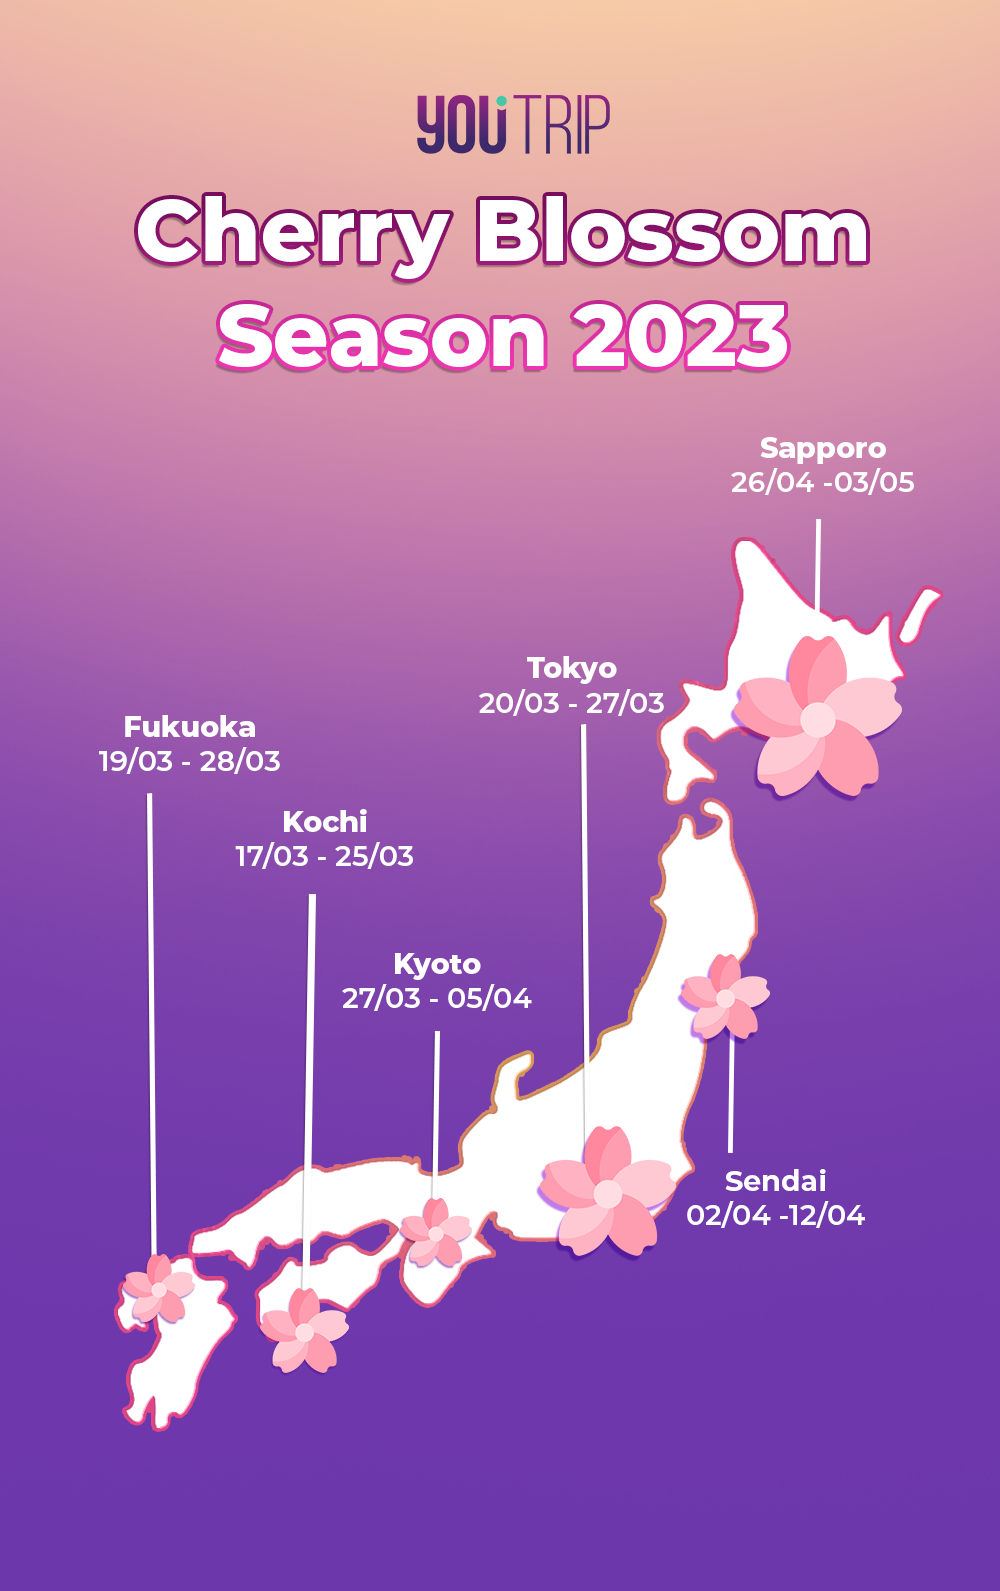 youtrip-s-sakura-forecast-japan-2023-cherry-blossom-season-blog-youtrip-singapore